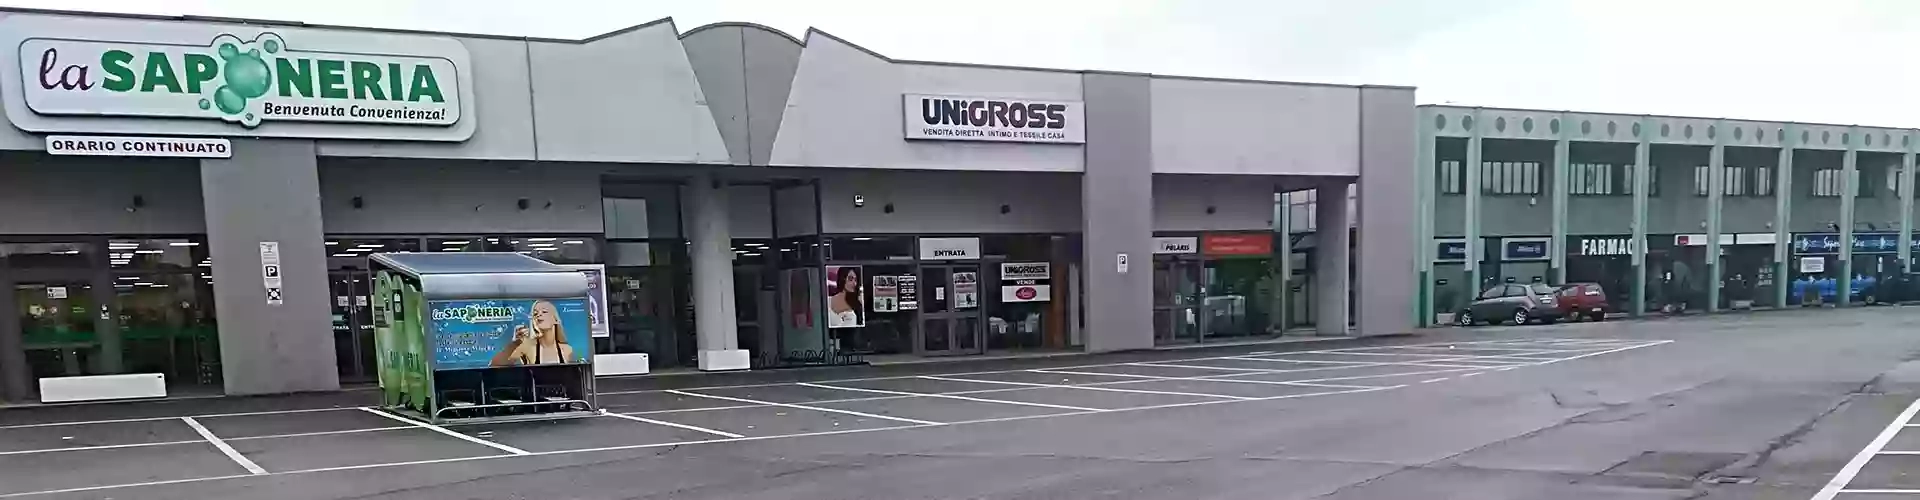 Unigross